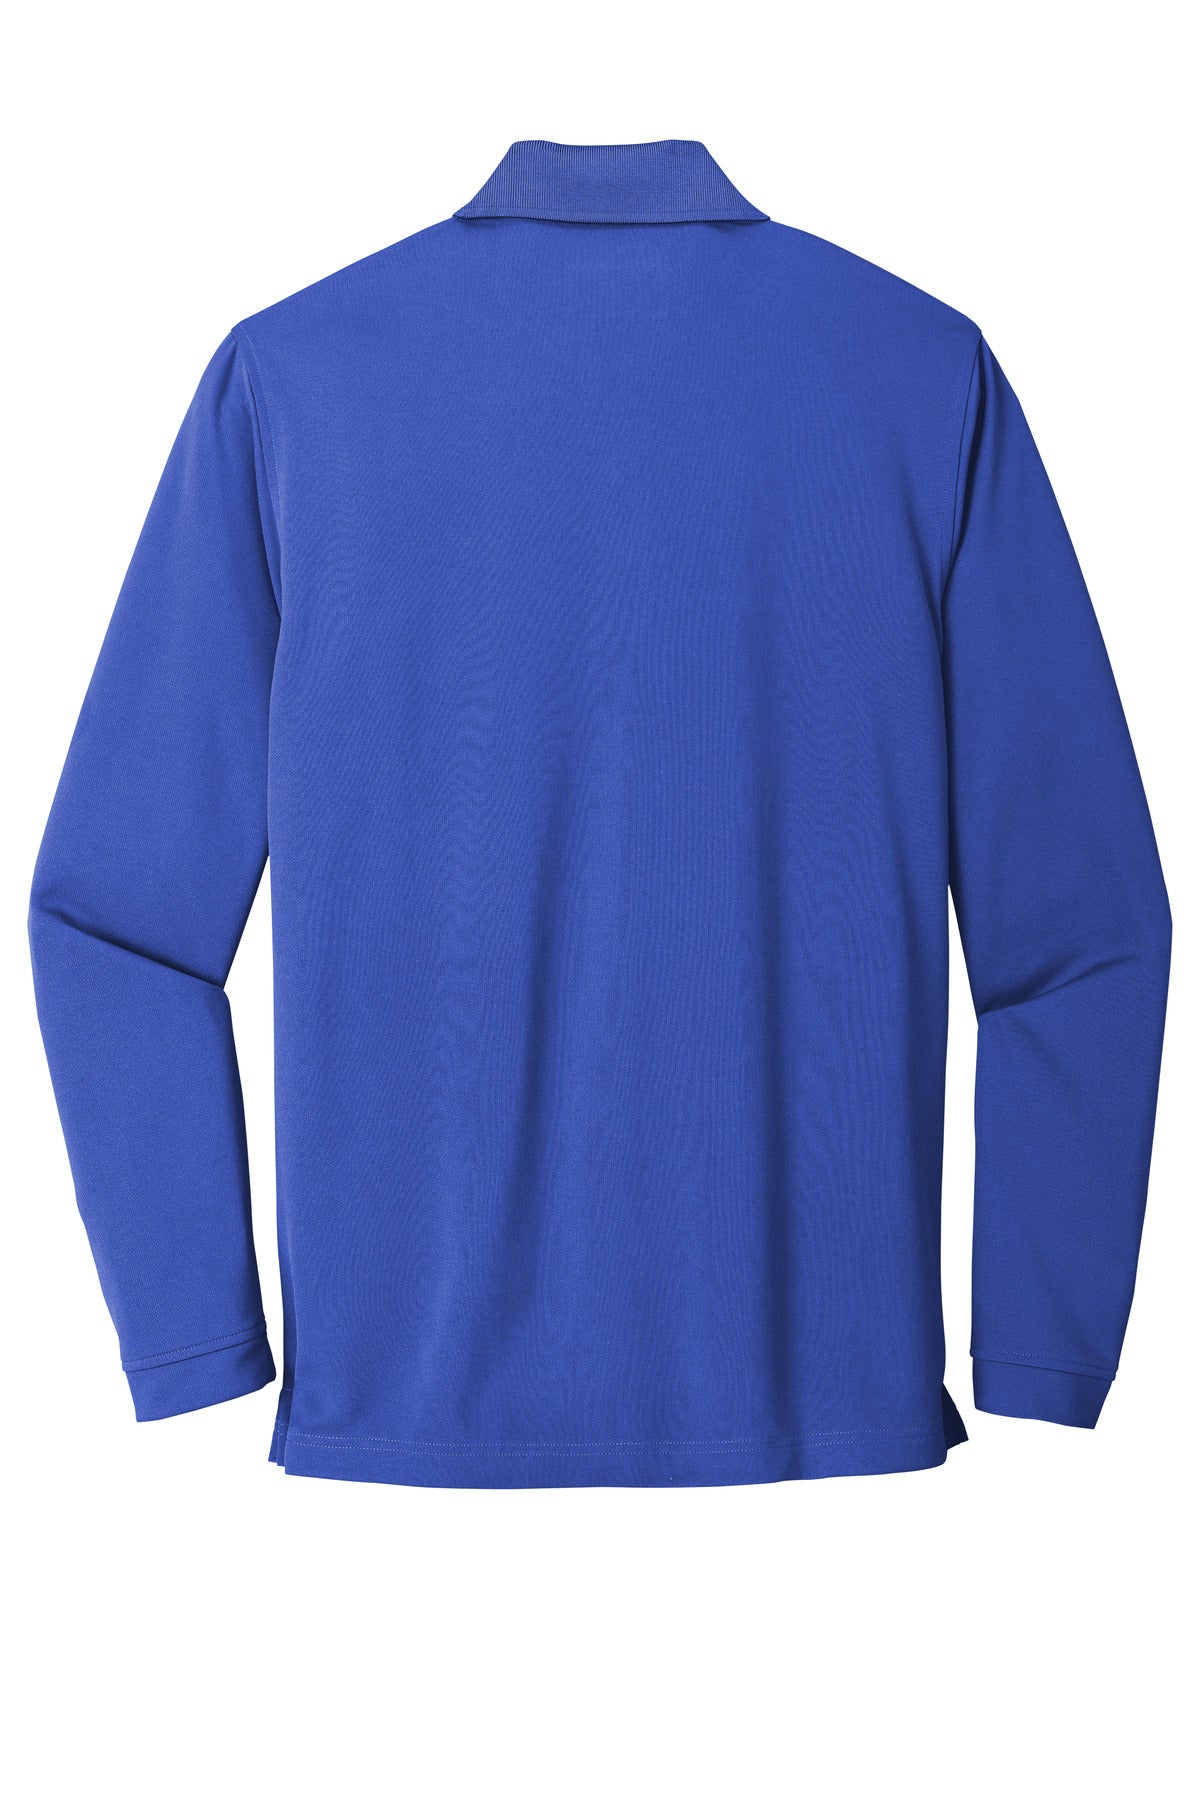 Port Authority Dry Zone UV Micro-Mesh Long Sleeve Polo K110LS - BT Imprintables Shirts